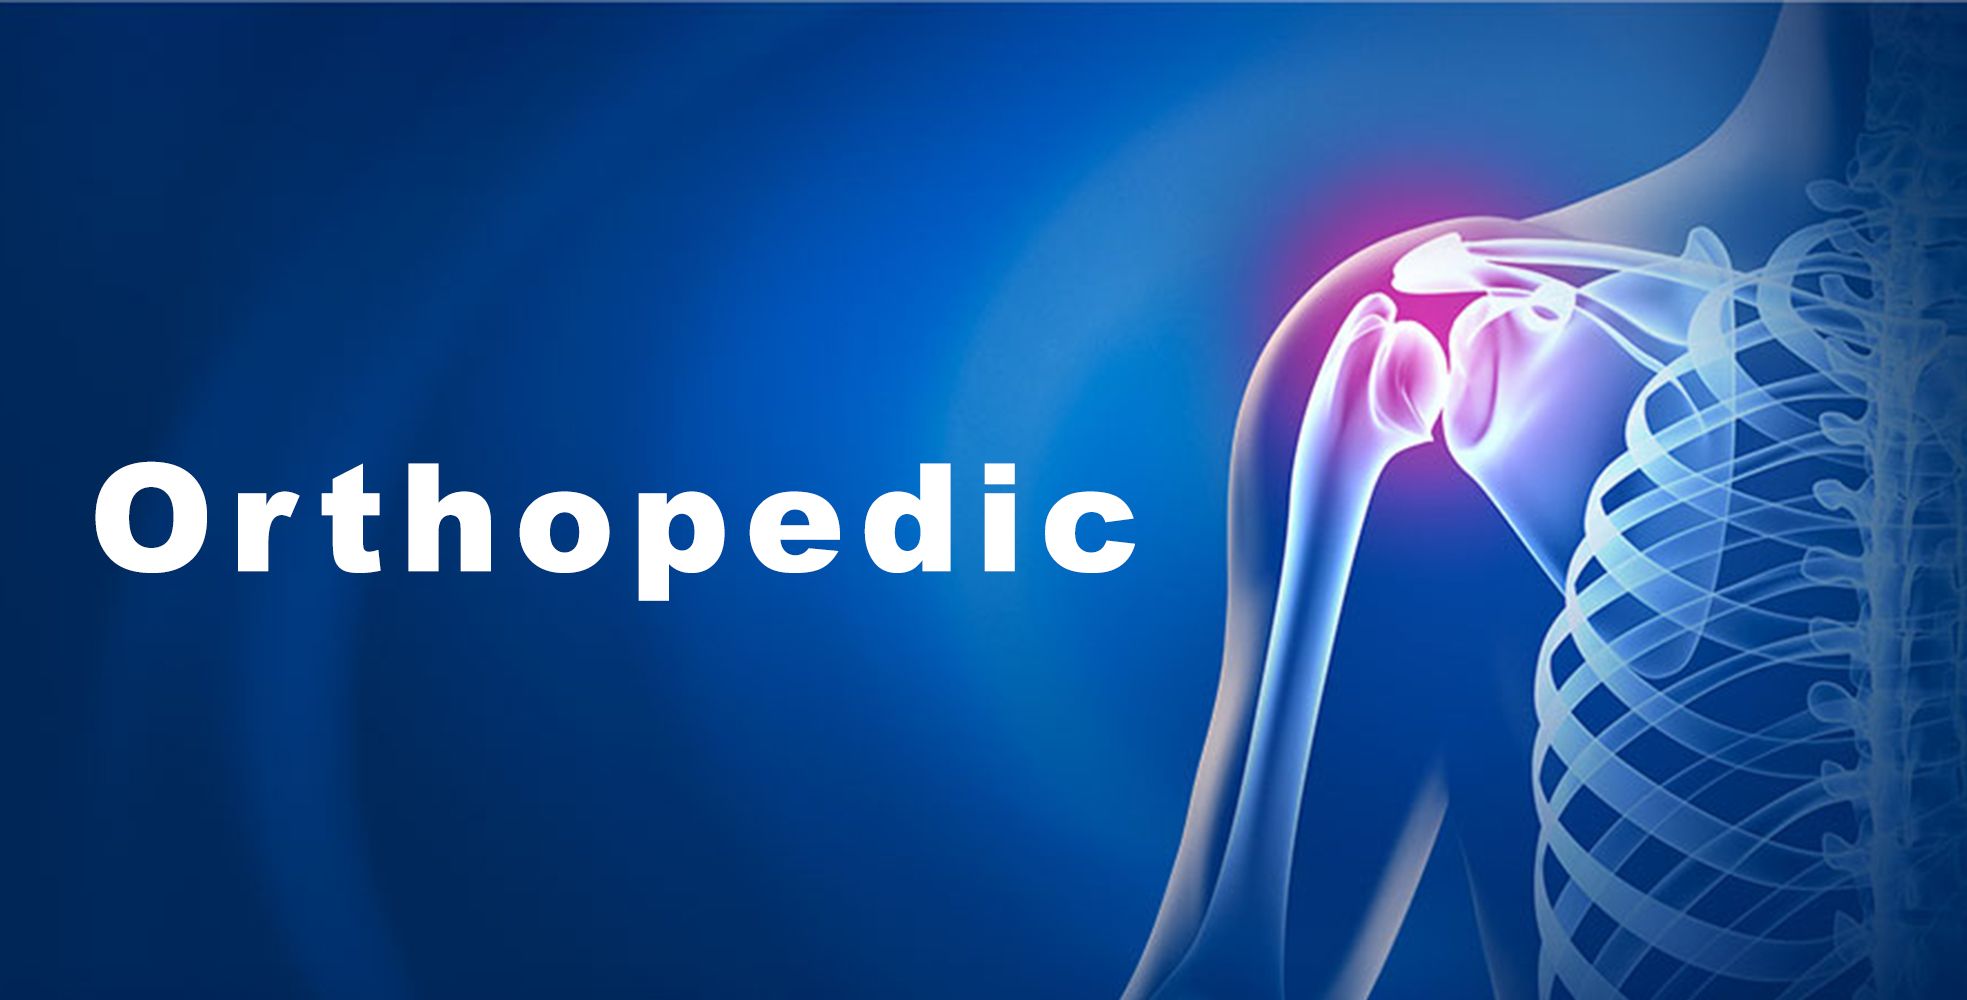 Orthopedic Wallpaper Free Orthopedic Background